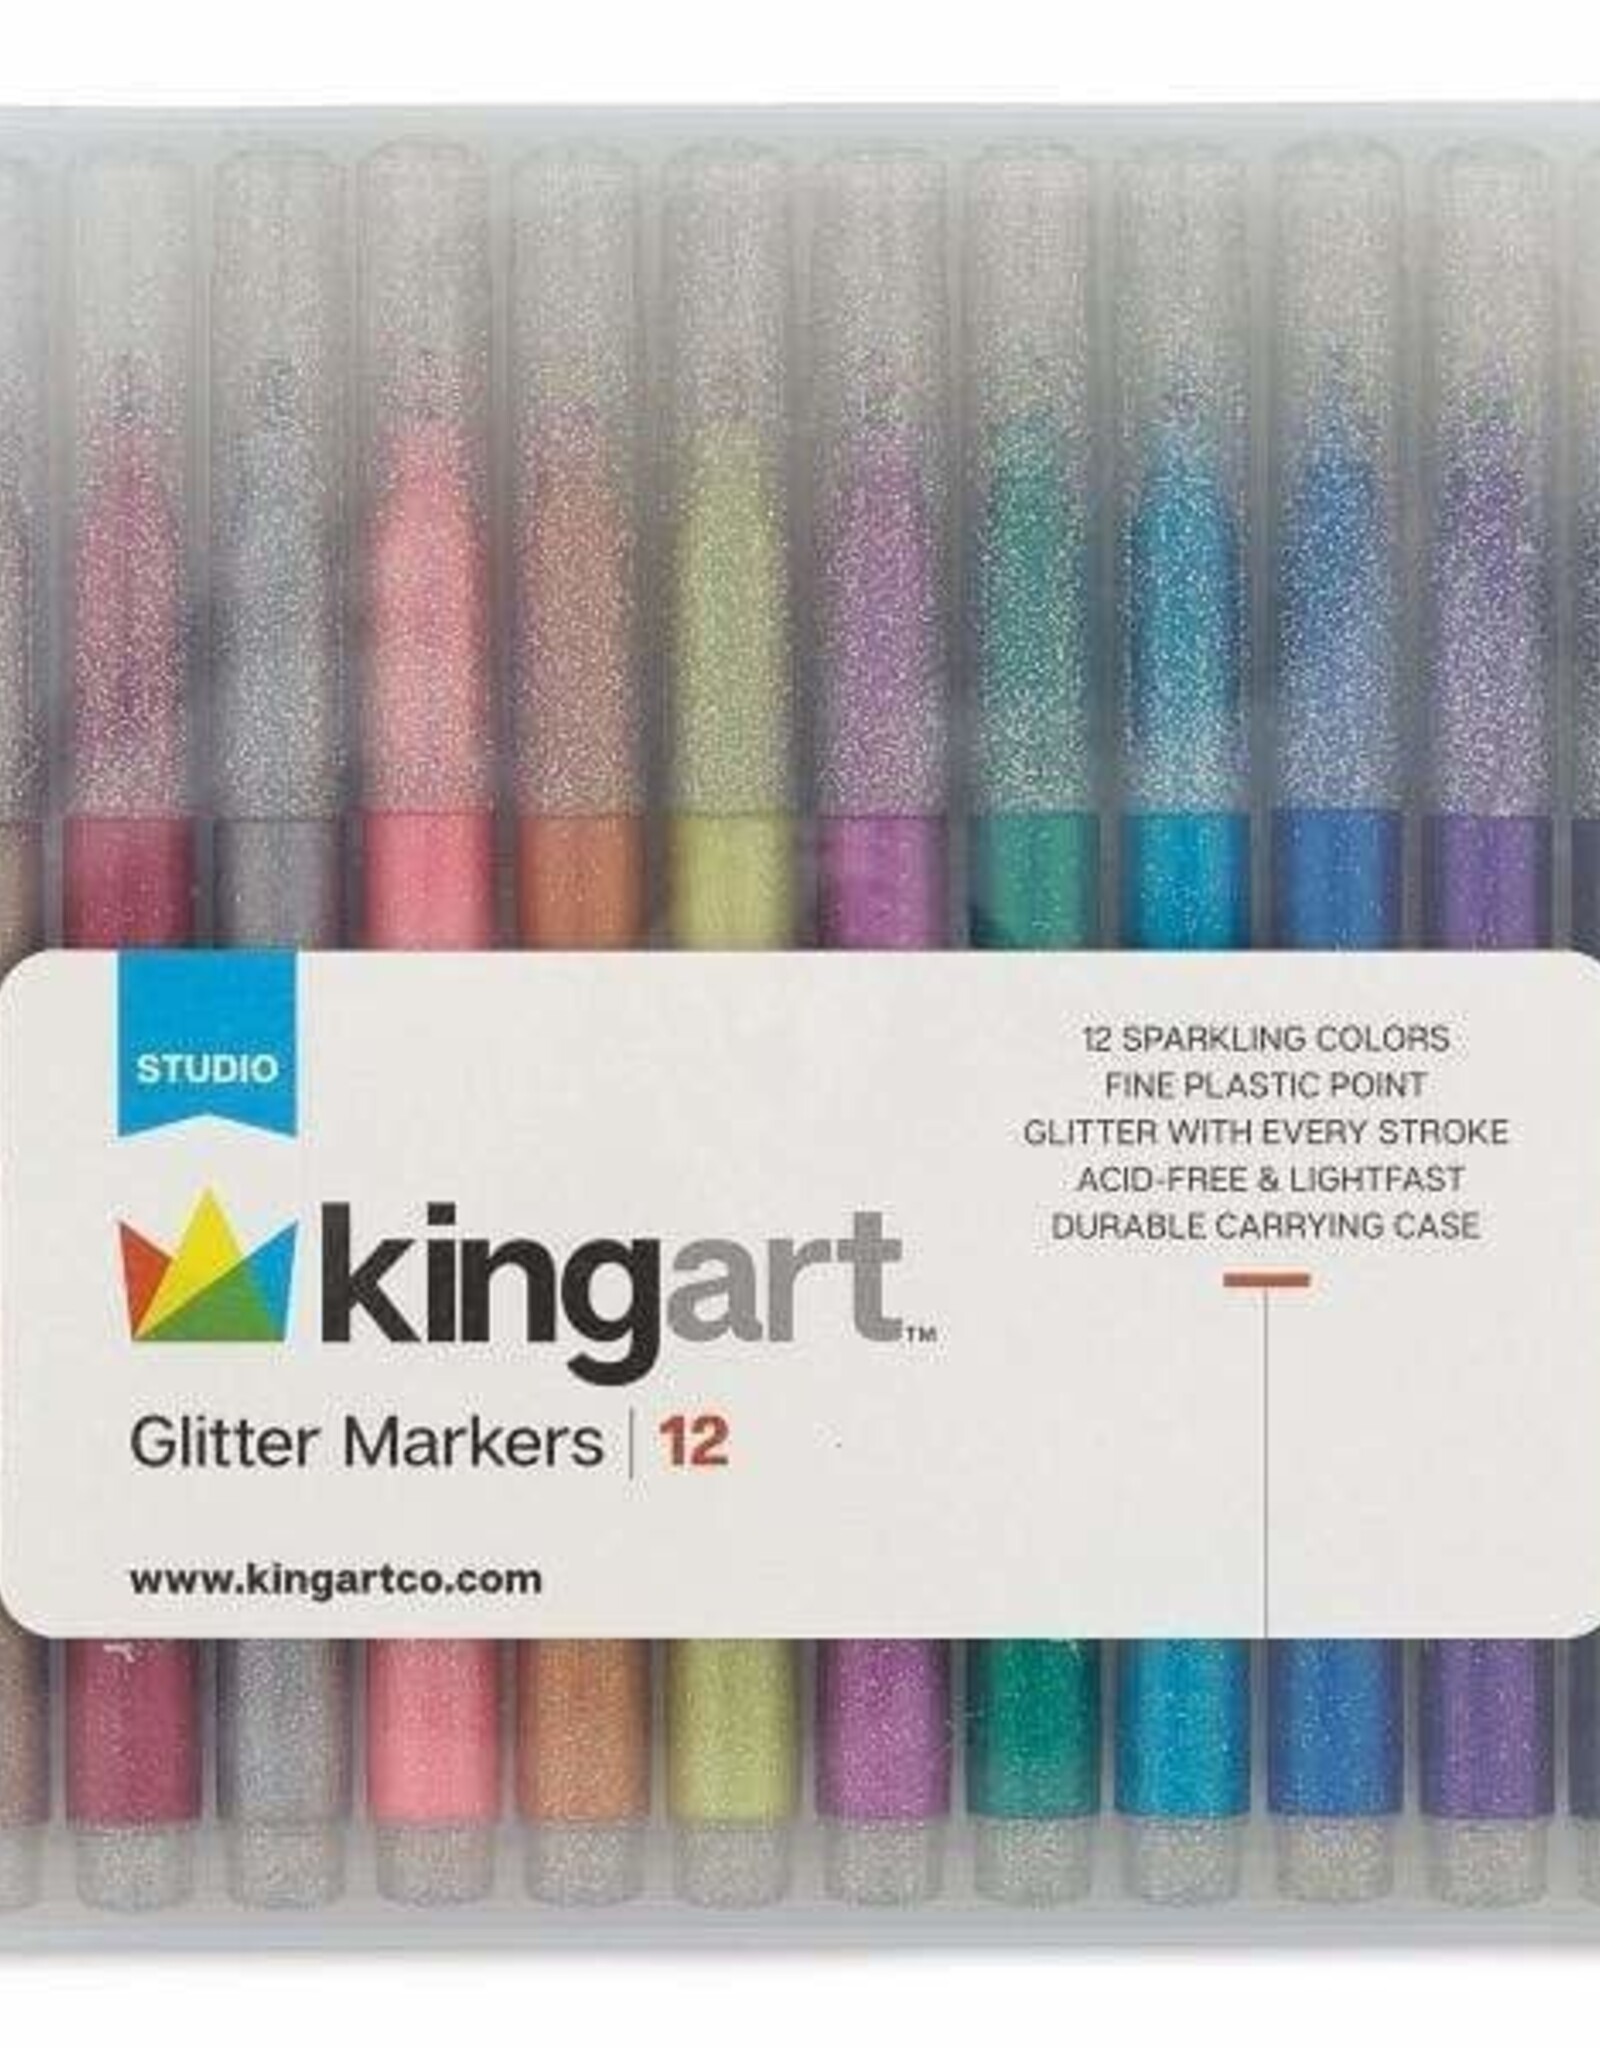 Glitter Markers|12